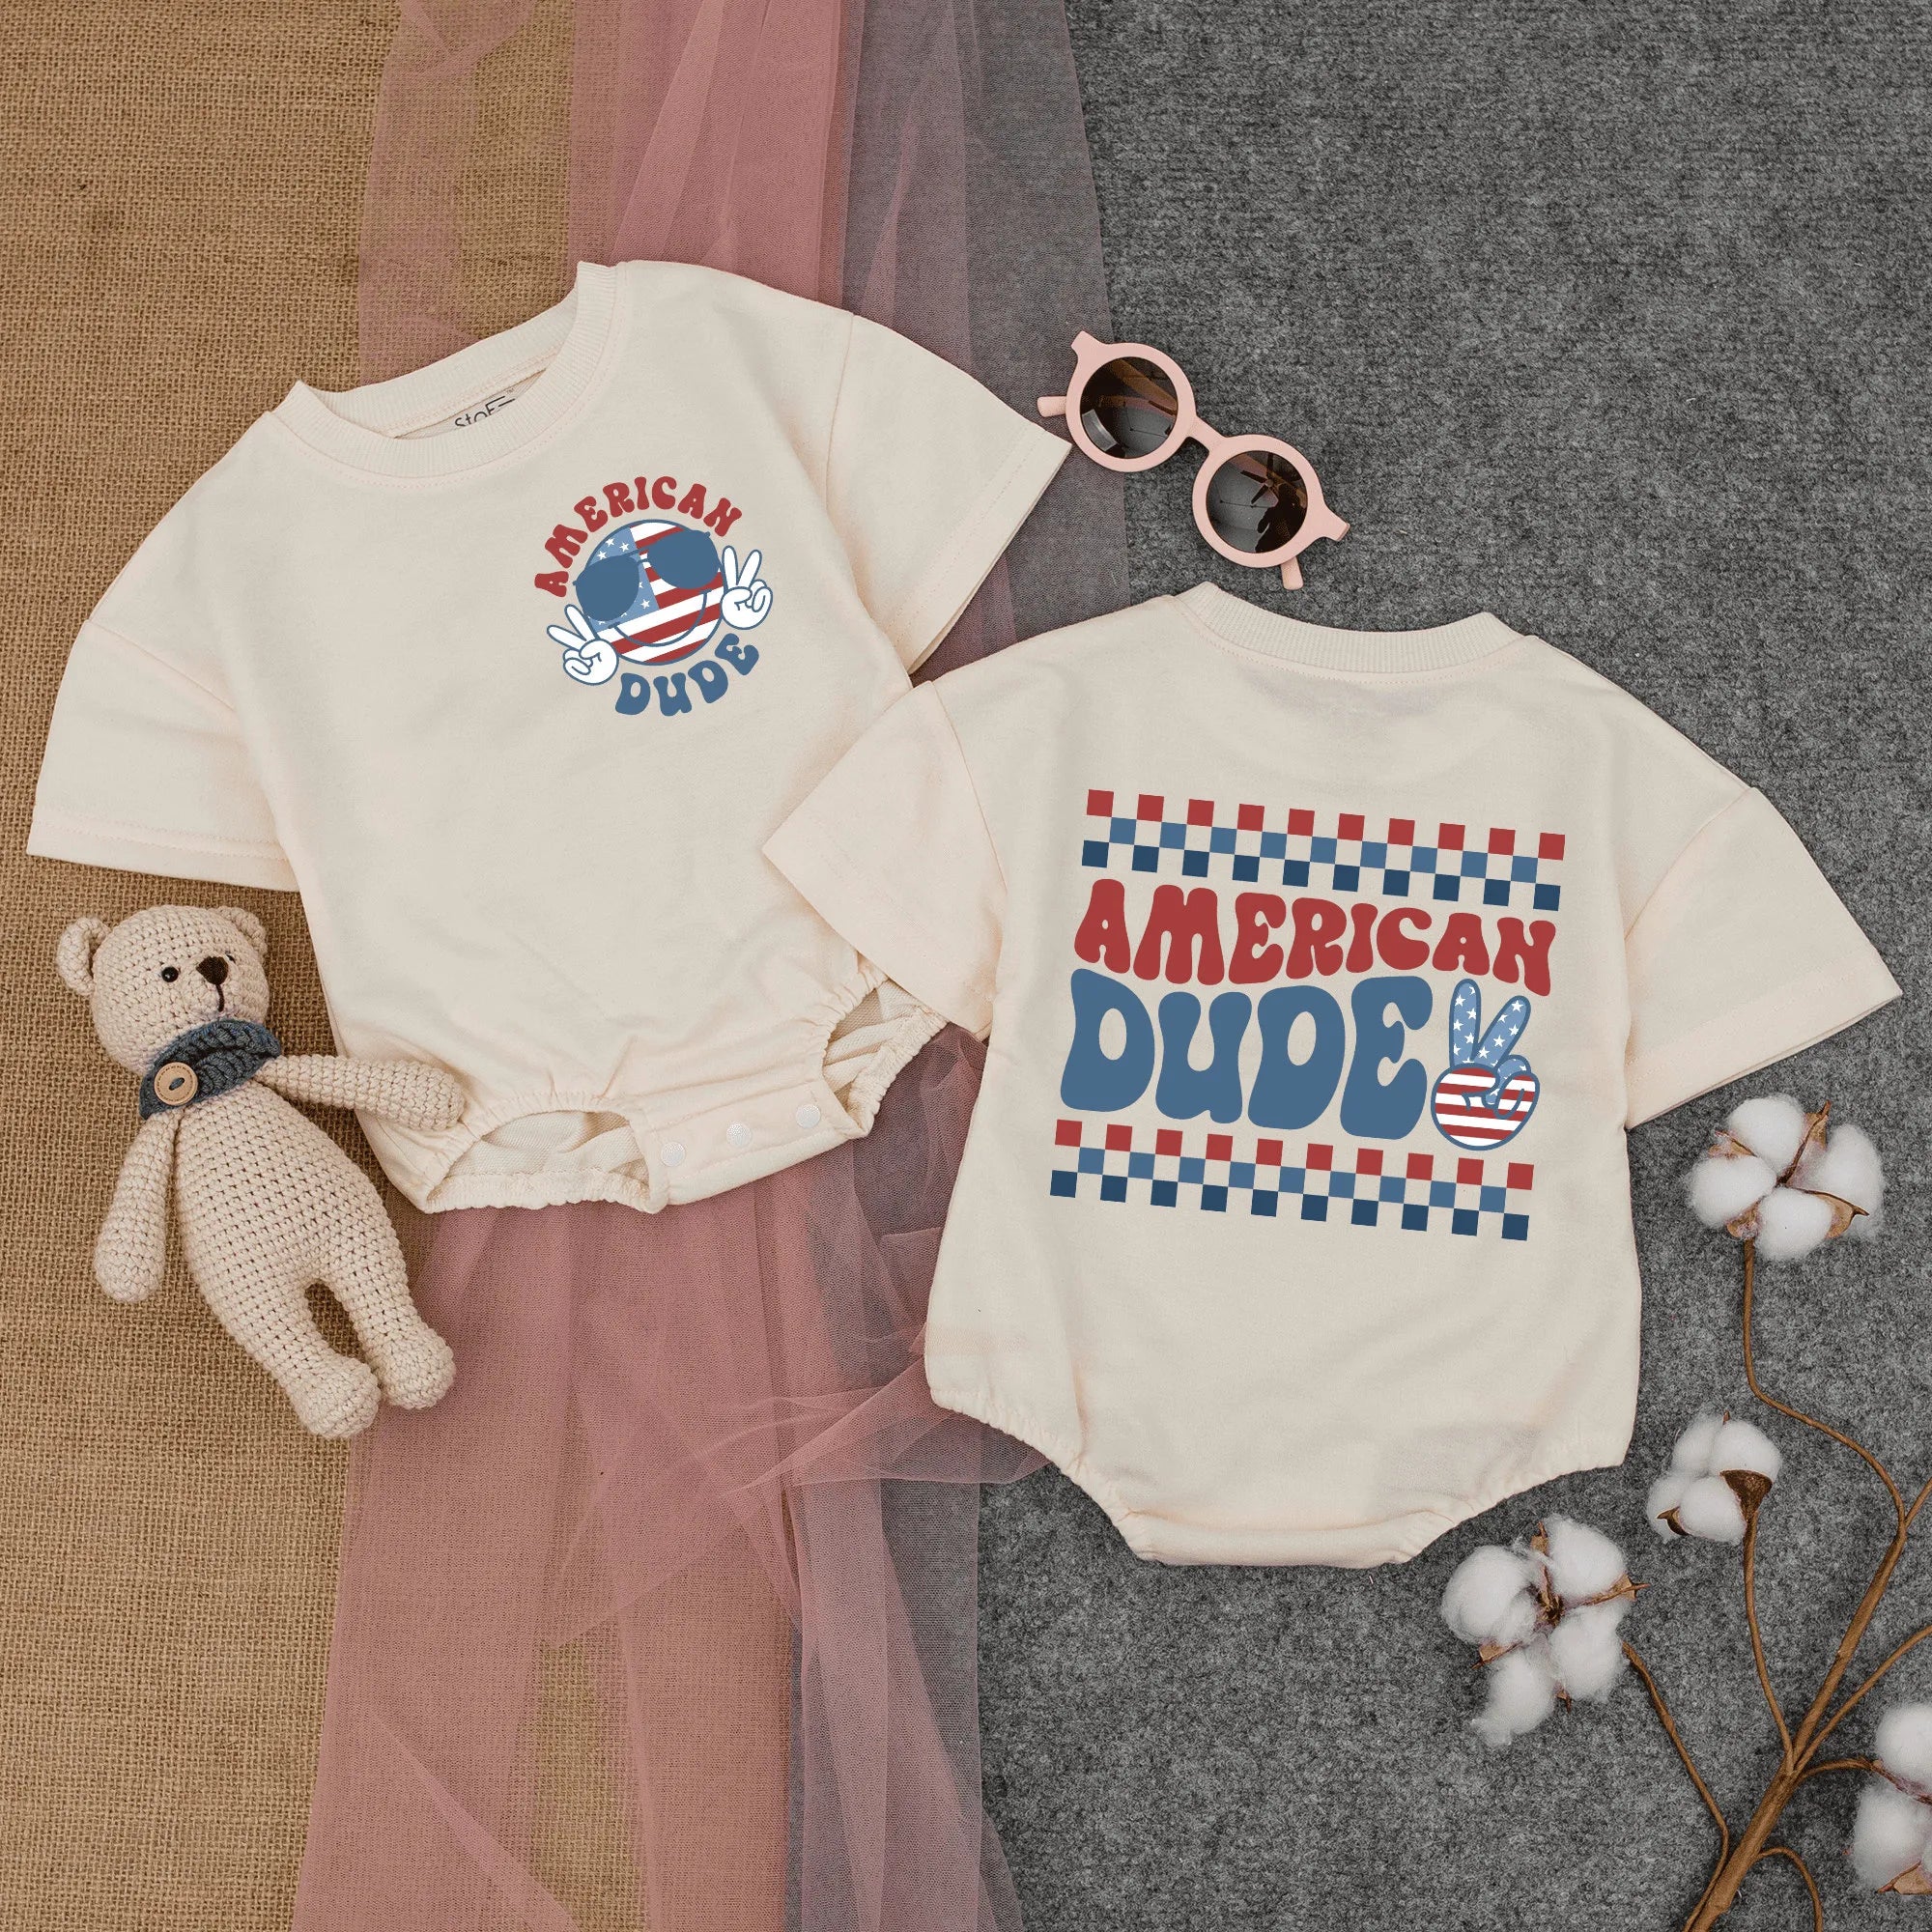 American Dude Baby Romper Short Sleeve: Retro Patriotic Outfit